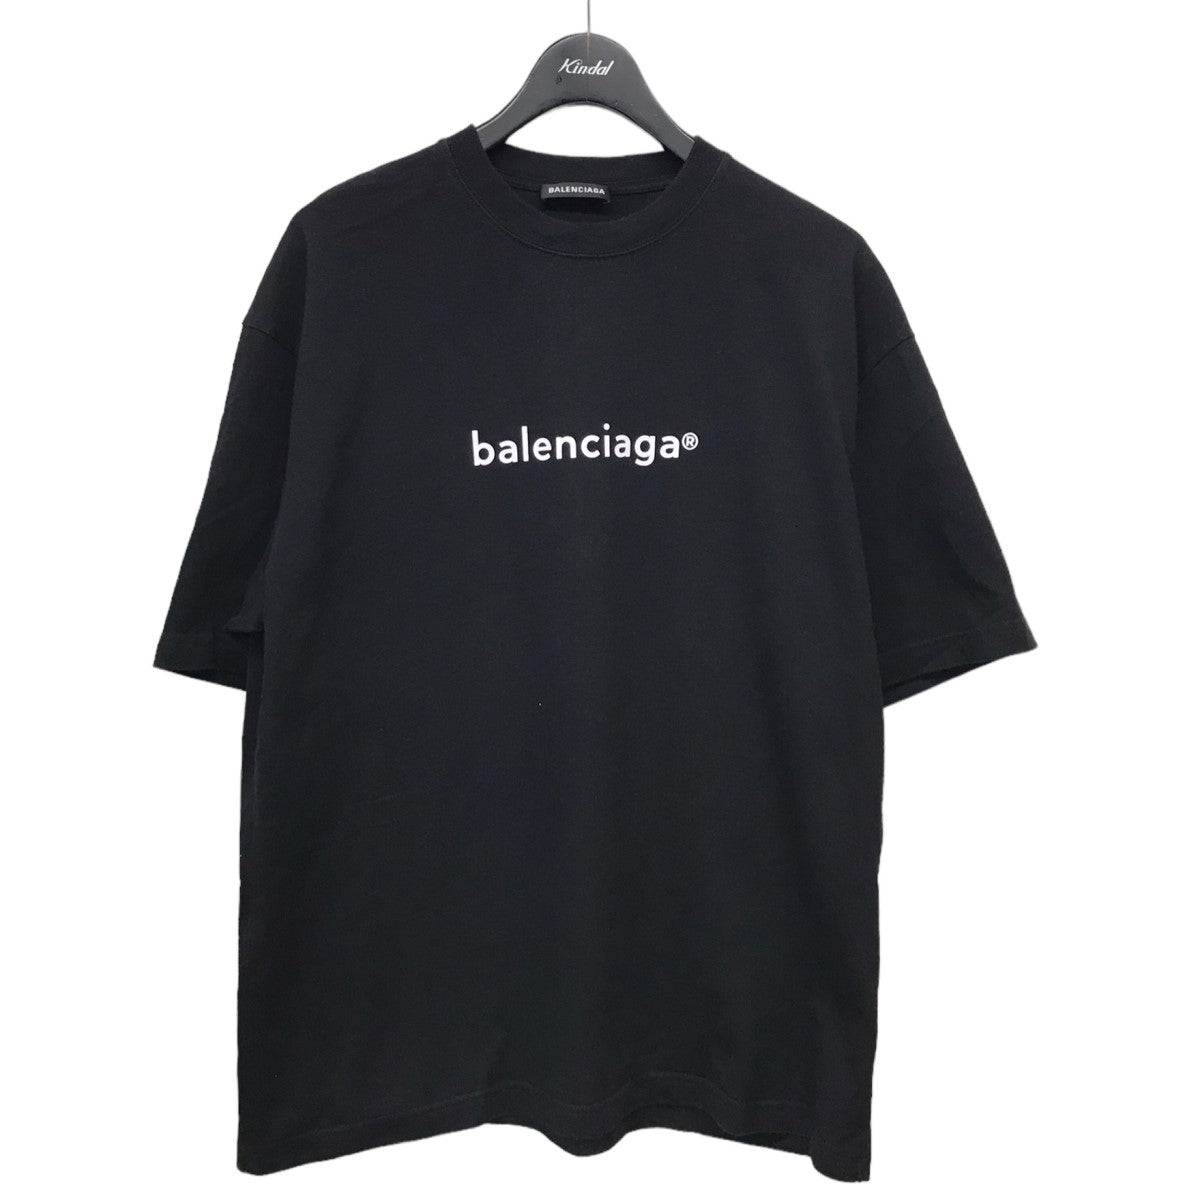 BALENCIAGA(バレンシアガ) コピーライトロゴプリントTシャツ612966 